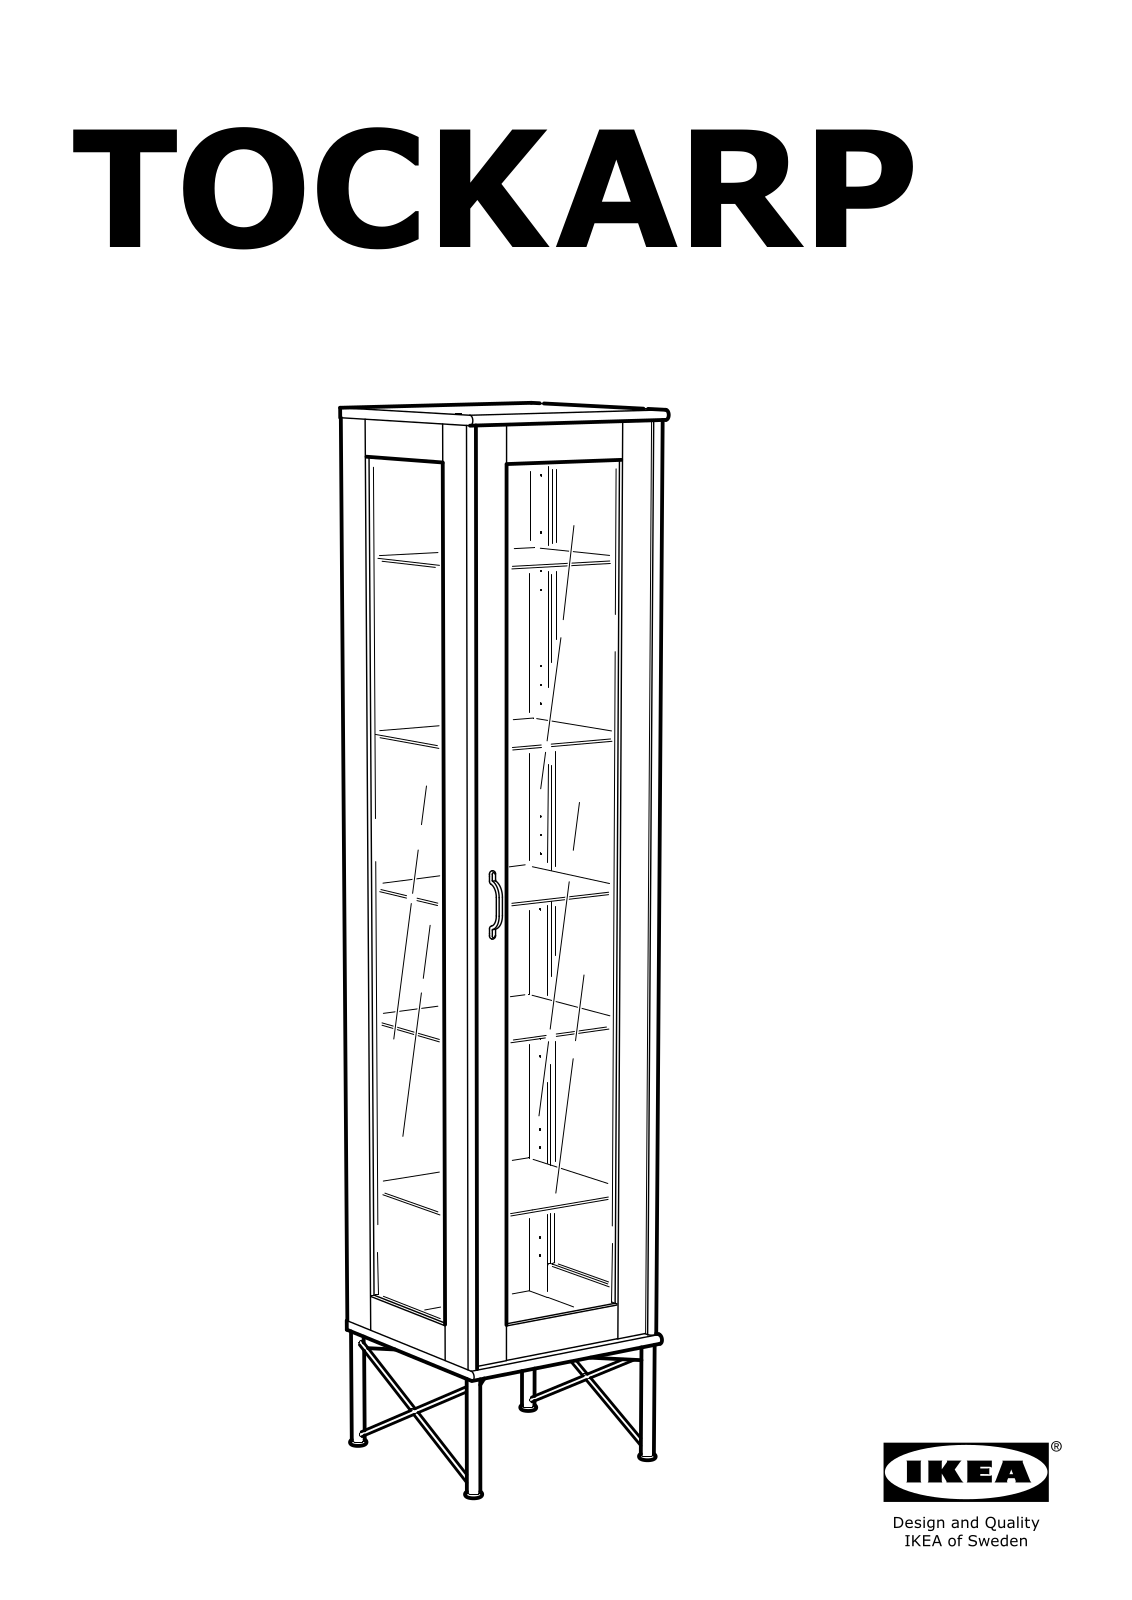 IKEA TOCKARP User Manual